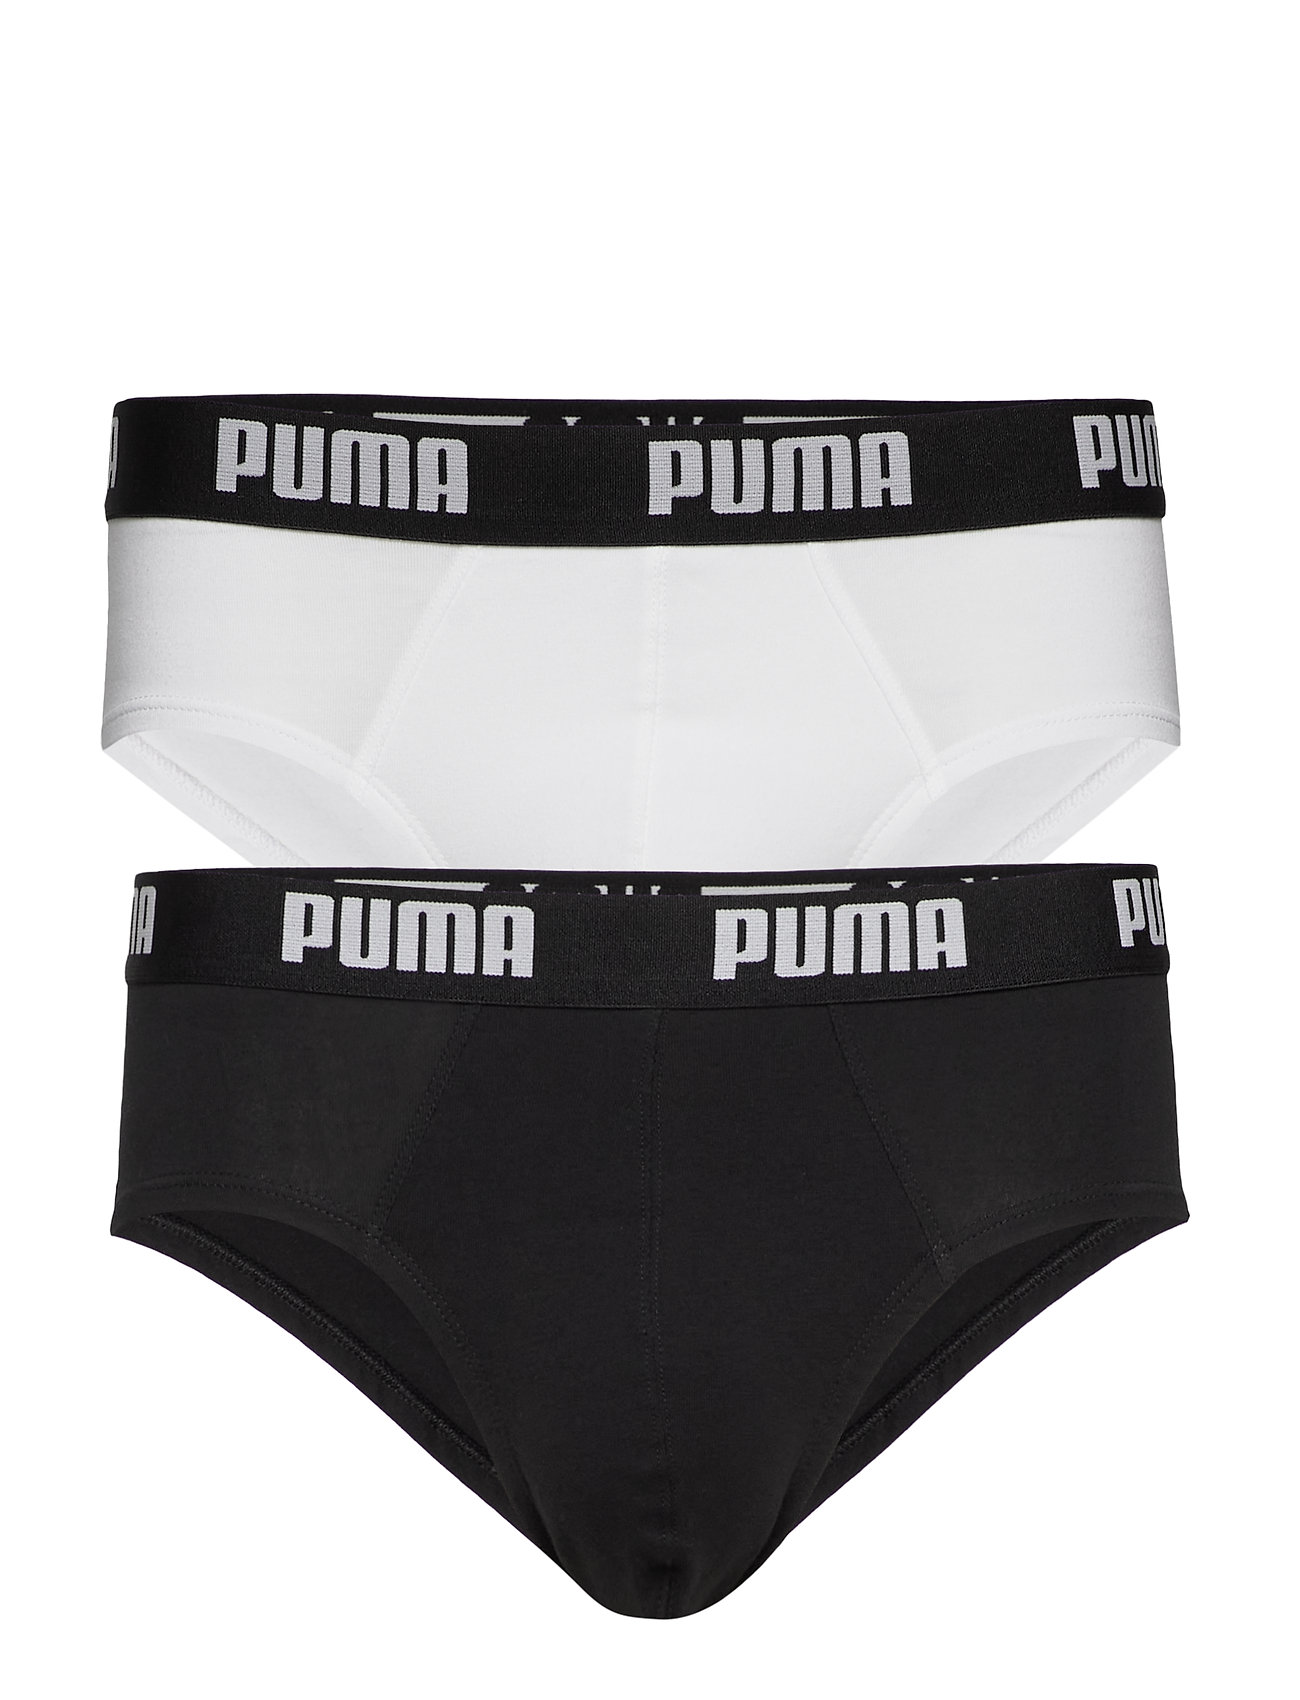 PUMA Puma Basic Brief 2p (White / Black 